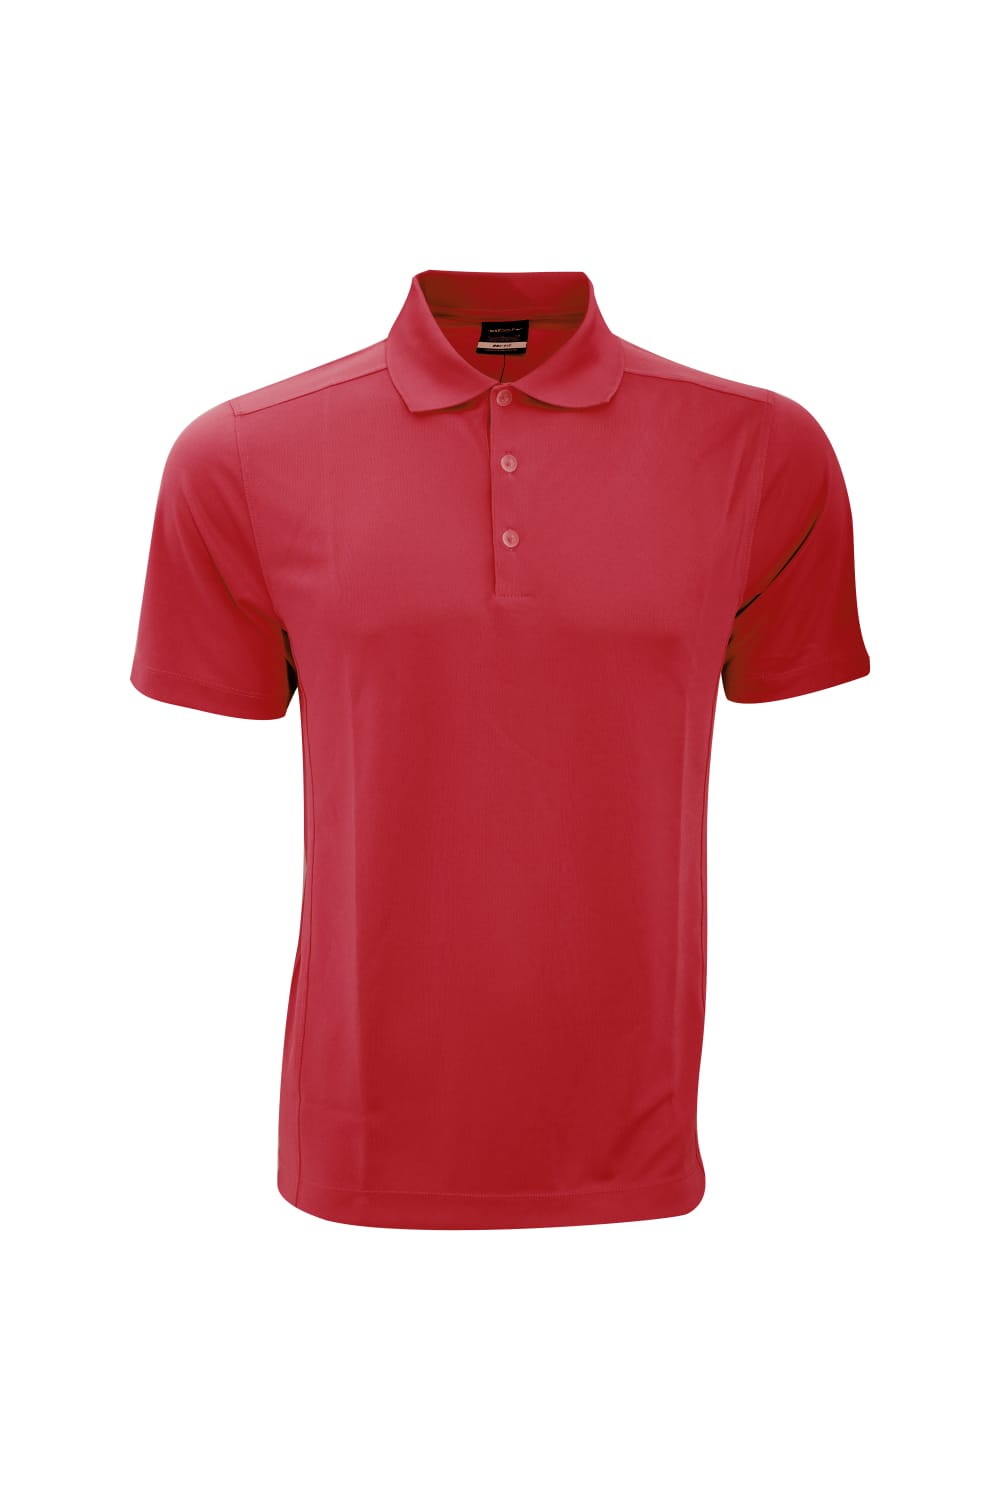 Nike Mens Dri-Fit Sports Polo Shirt (Varsity Red)